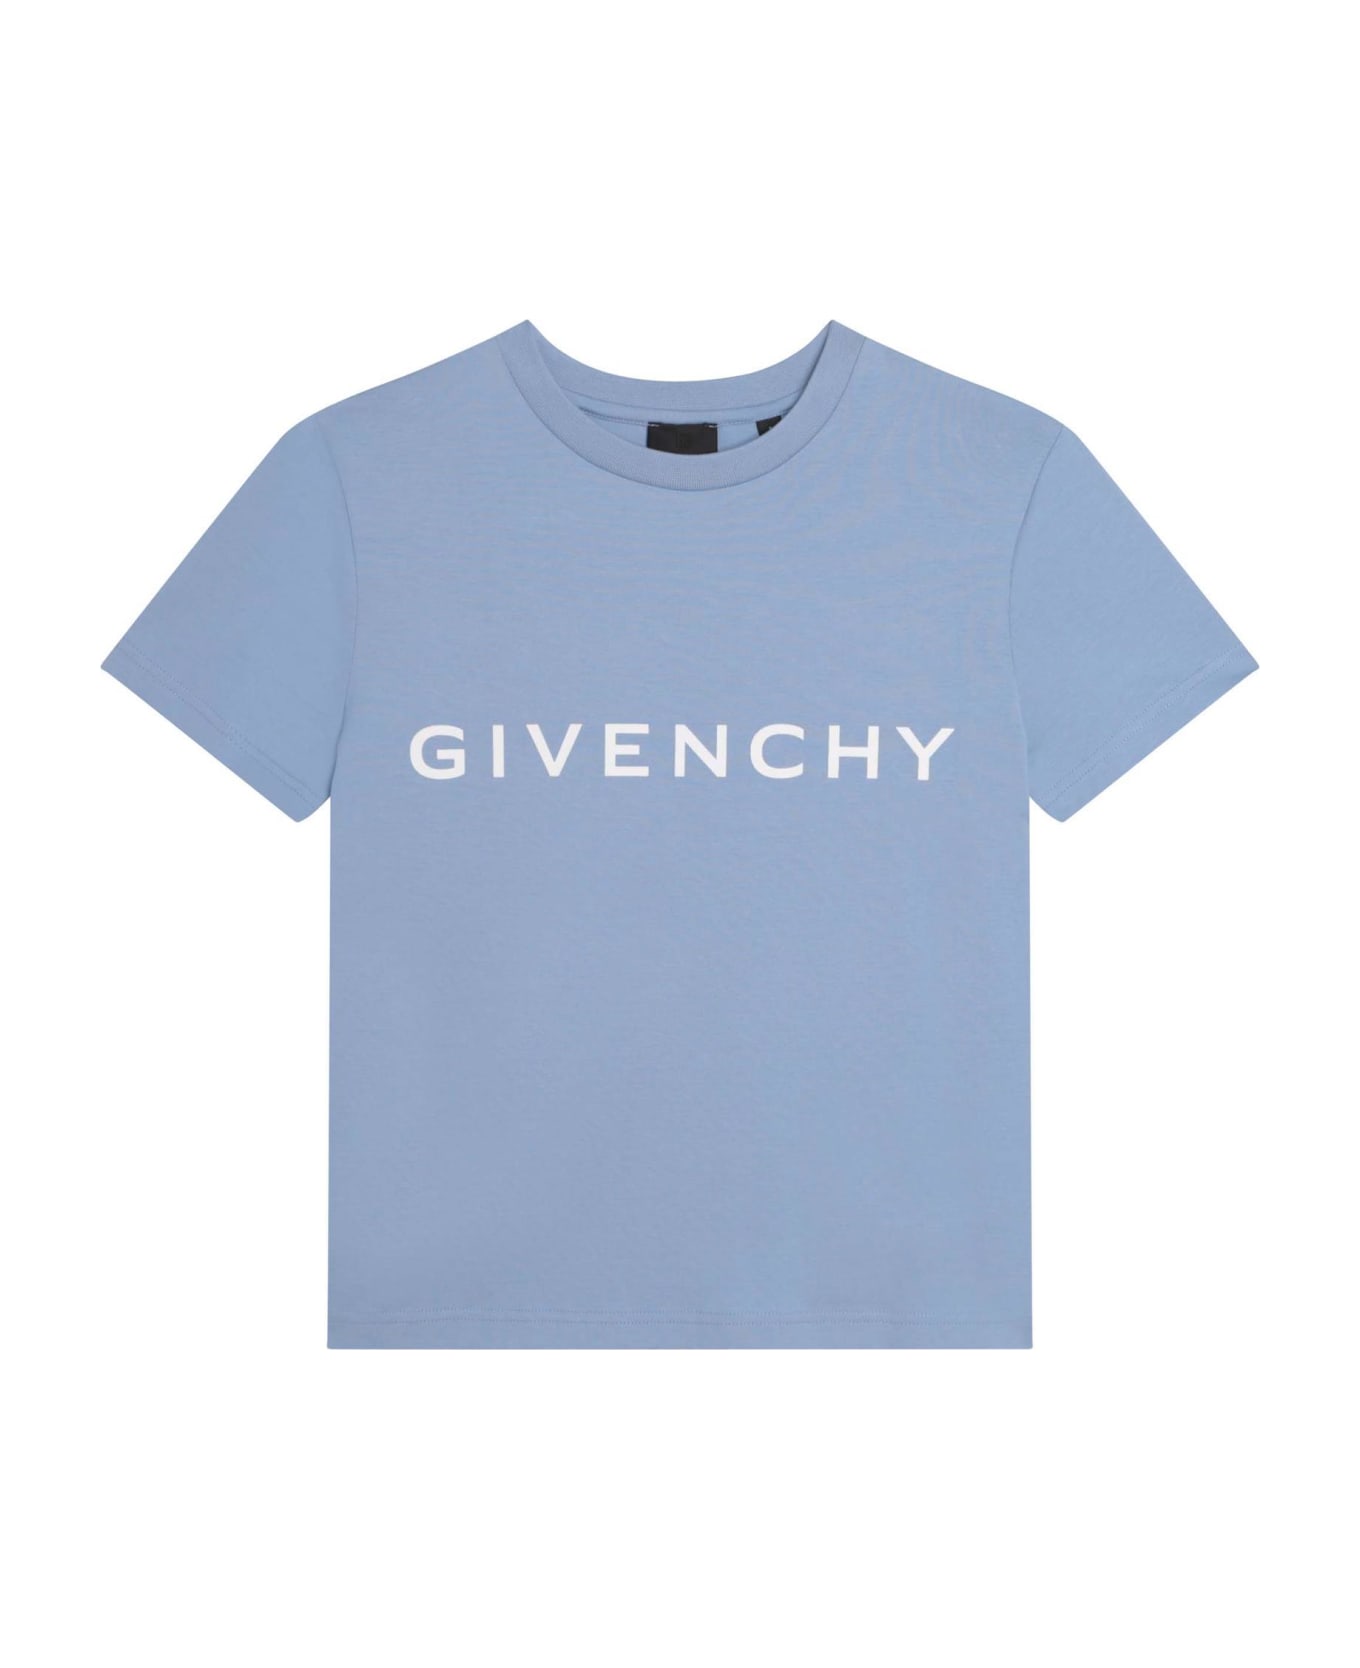 Givenchy Printed T-shirt - Light blue